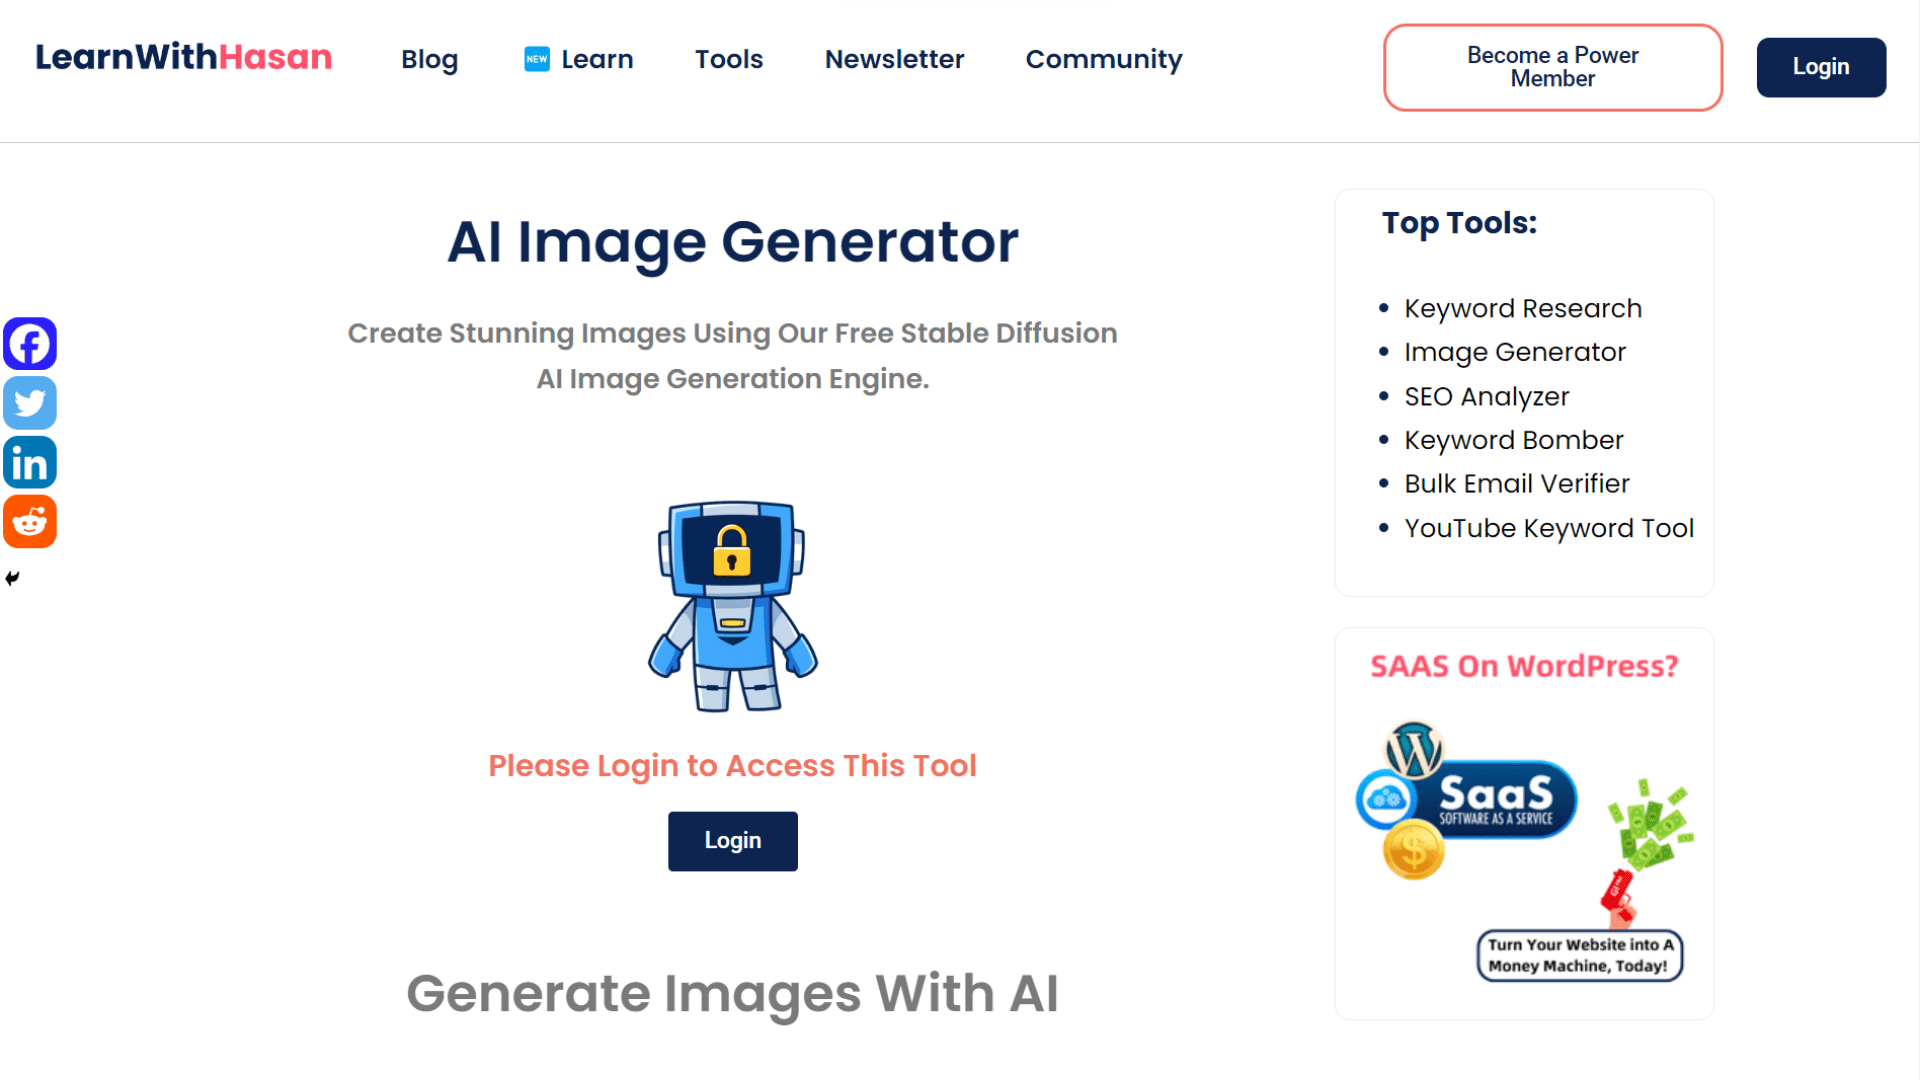 AI Image Generator by LearnWithHasan - Image Generators - Images (1)